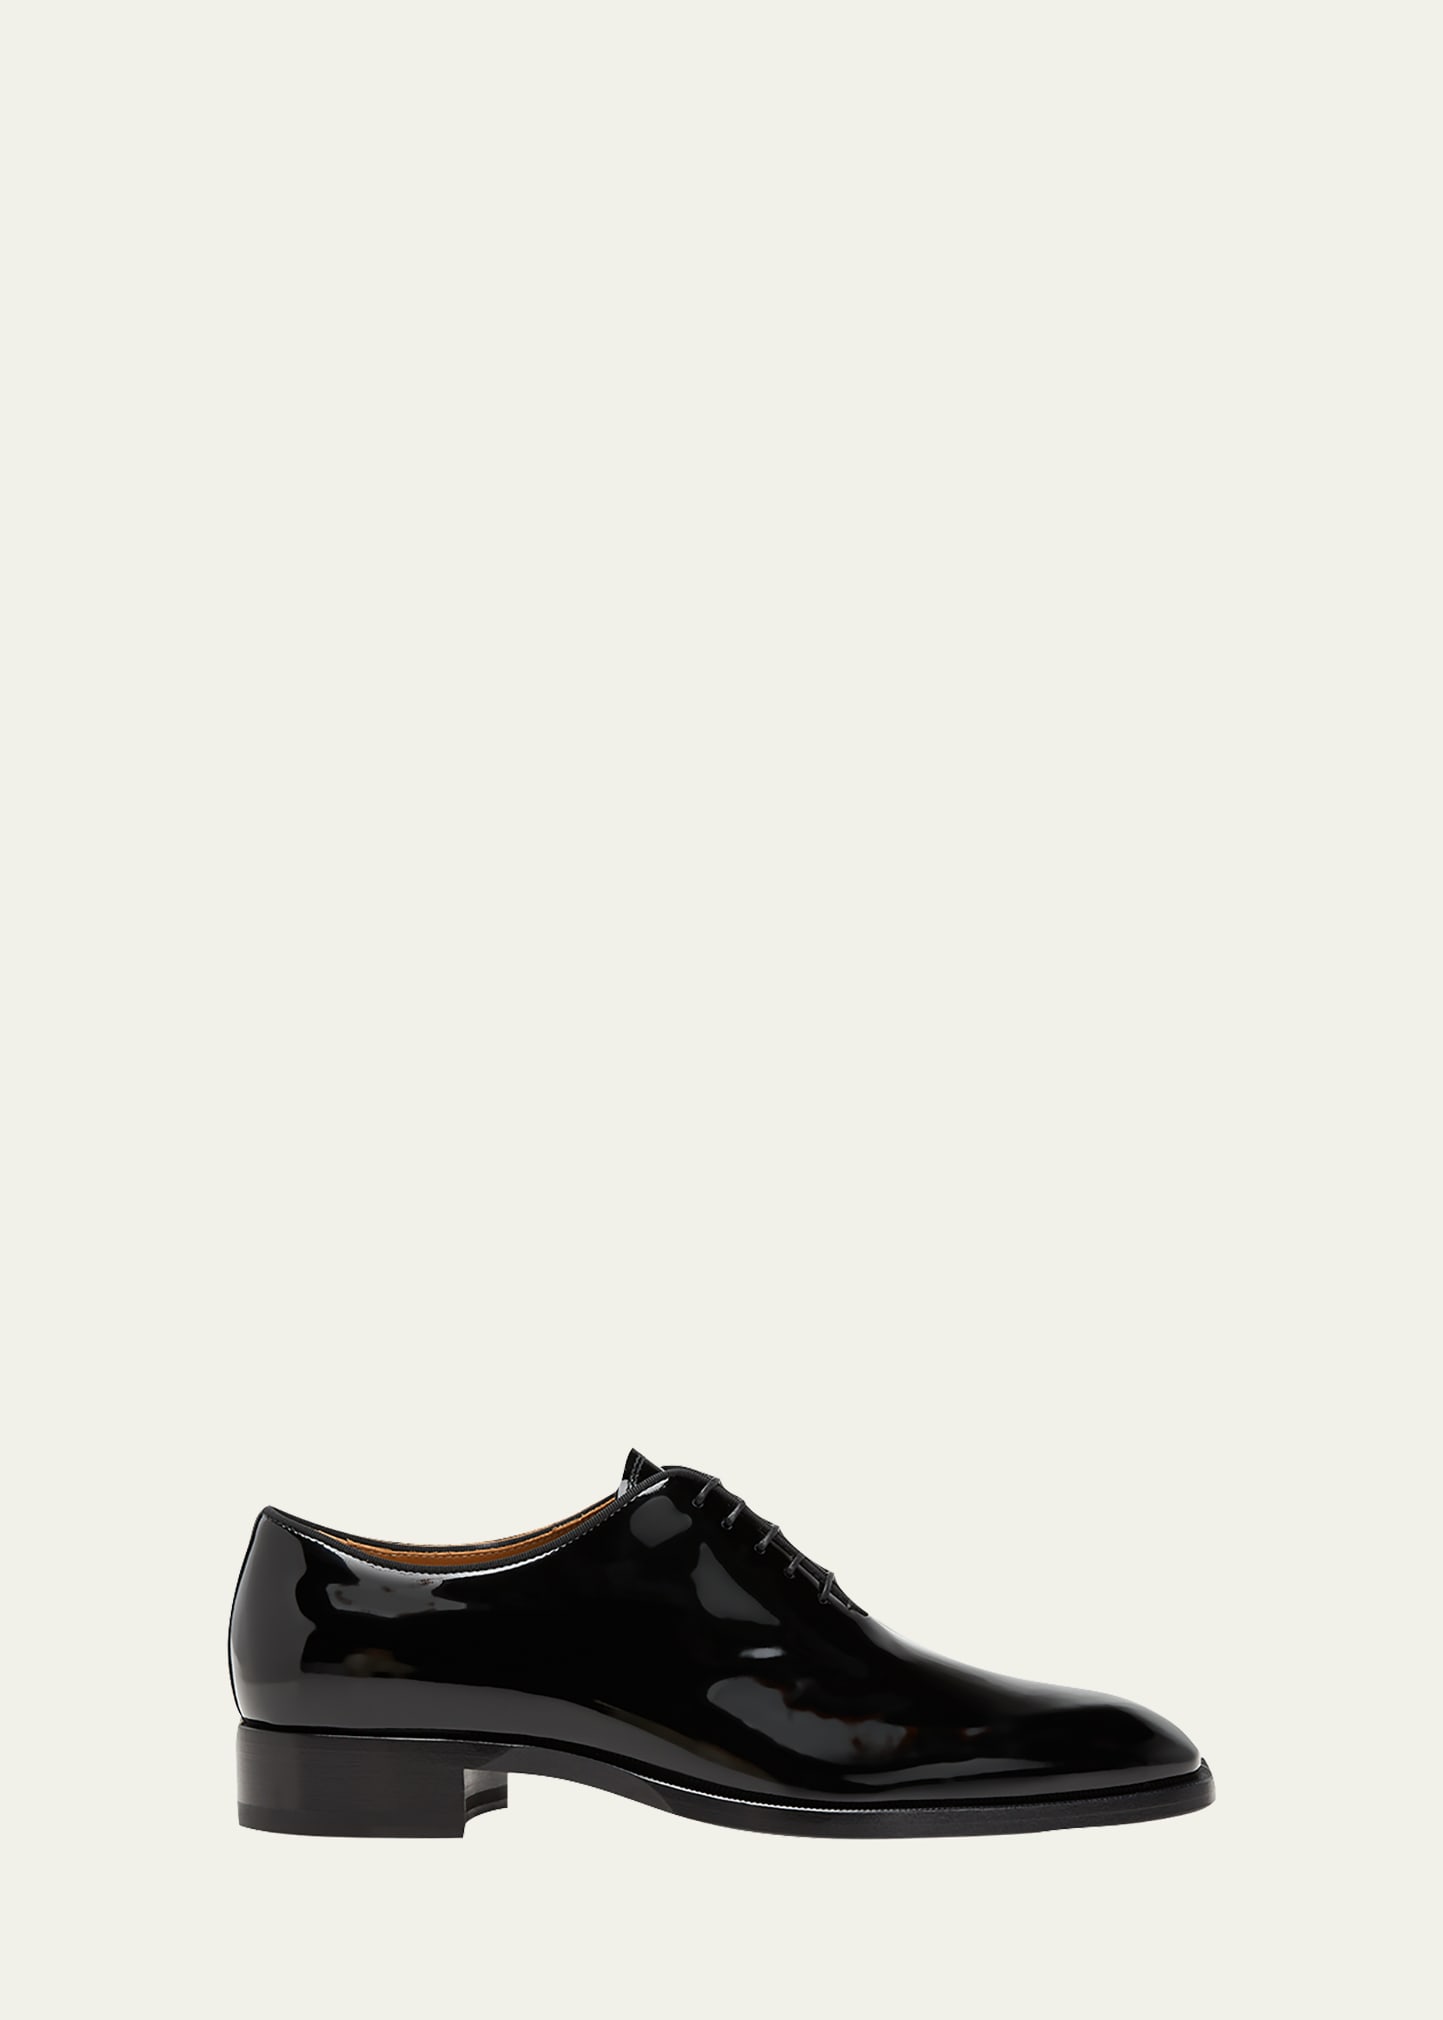 Men's Corteo Patent Leather Oxford Shoes